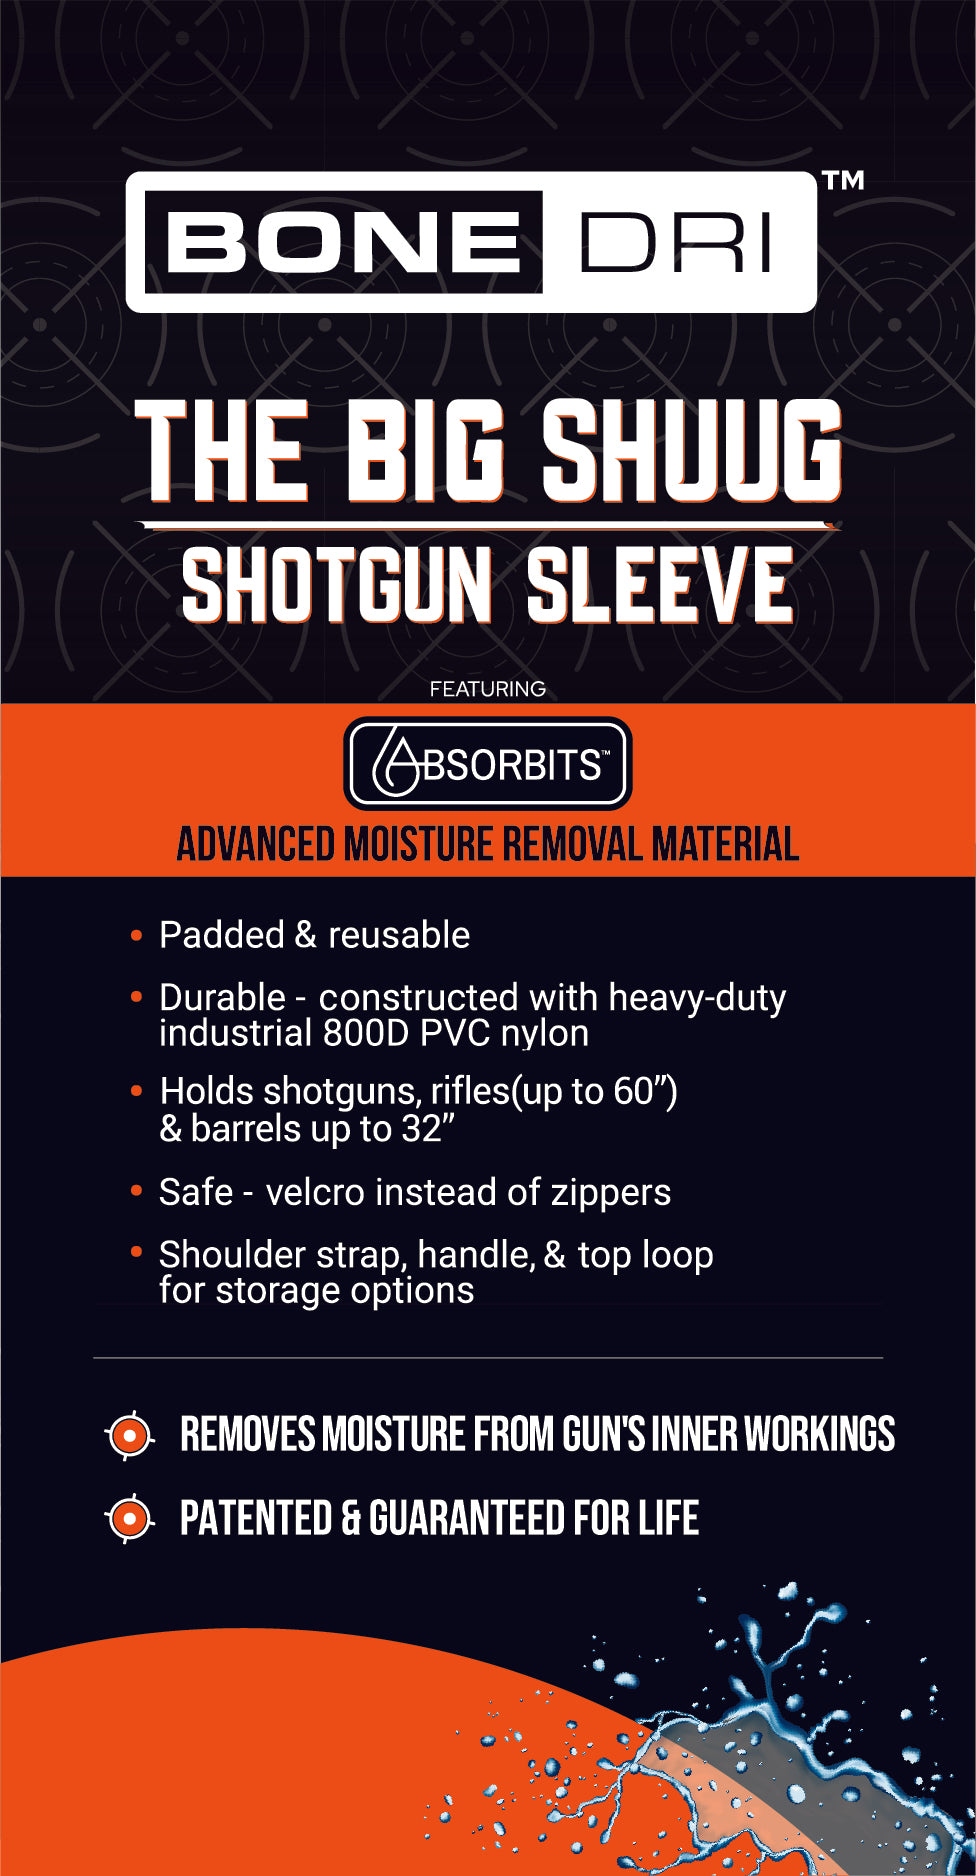 The "Big Shuug" Shotgun Sleeve